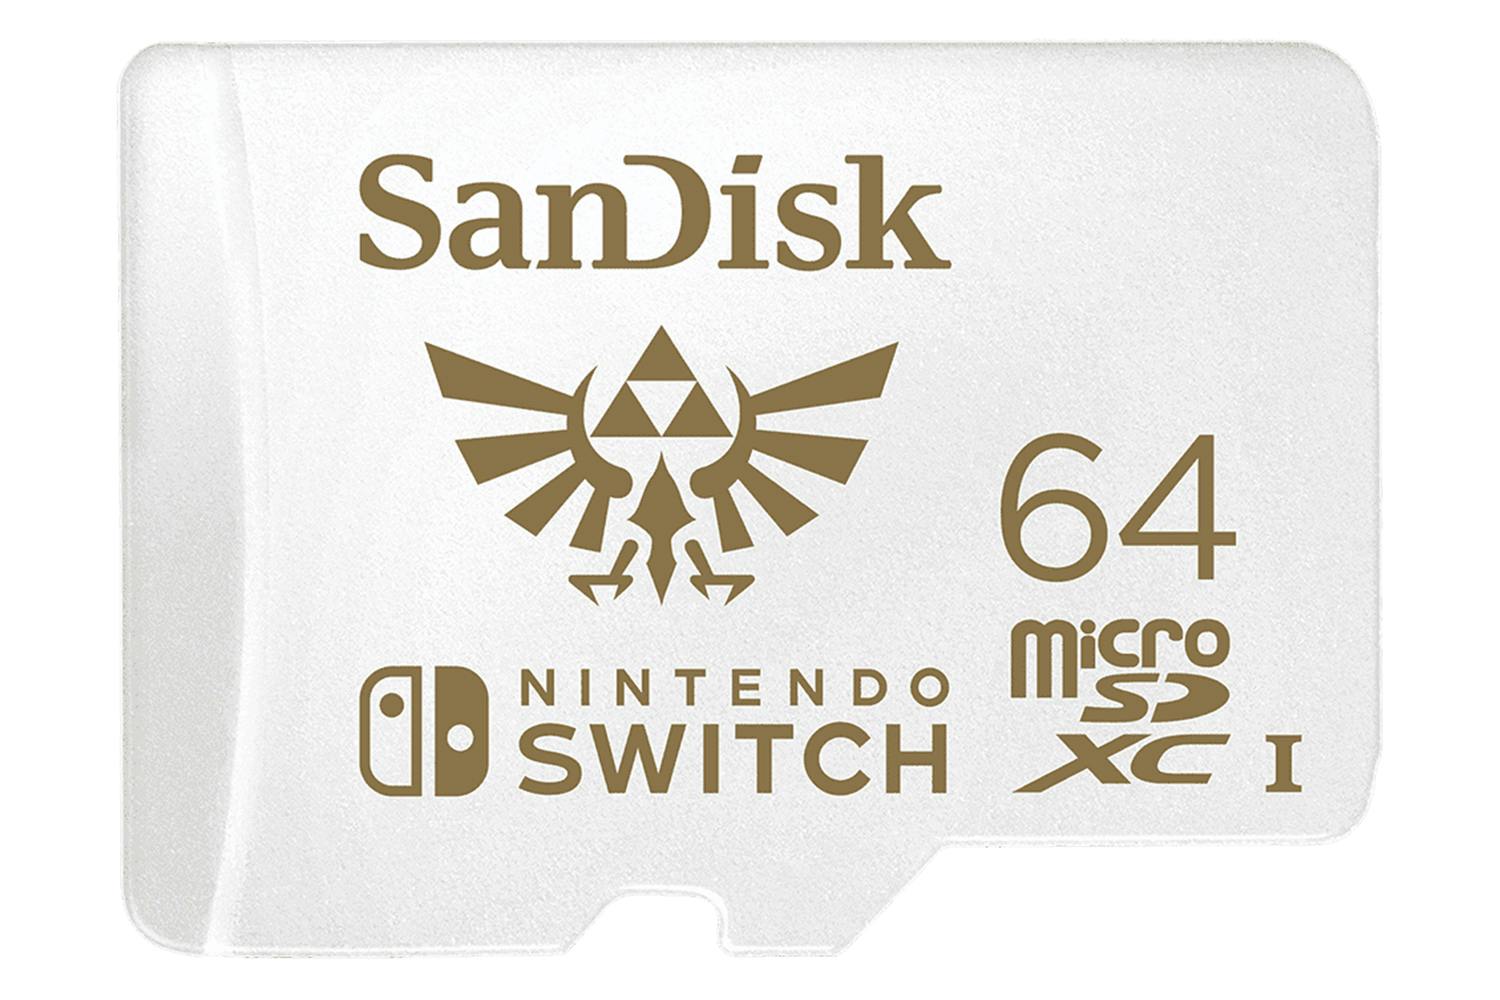 Sandisk Nintendo Switch Microsdxc Memory Card 64gb Ireland